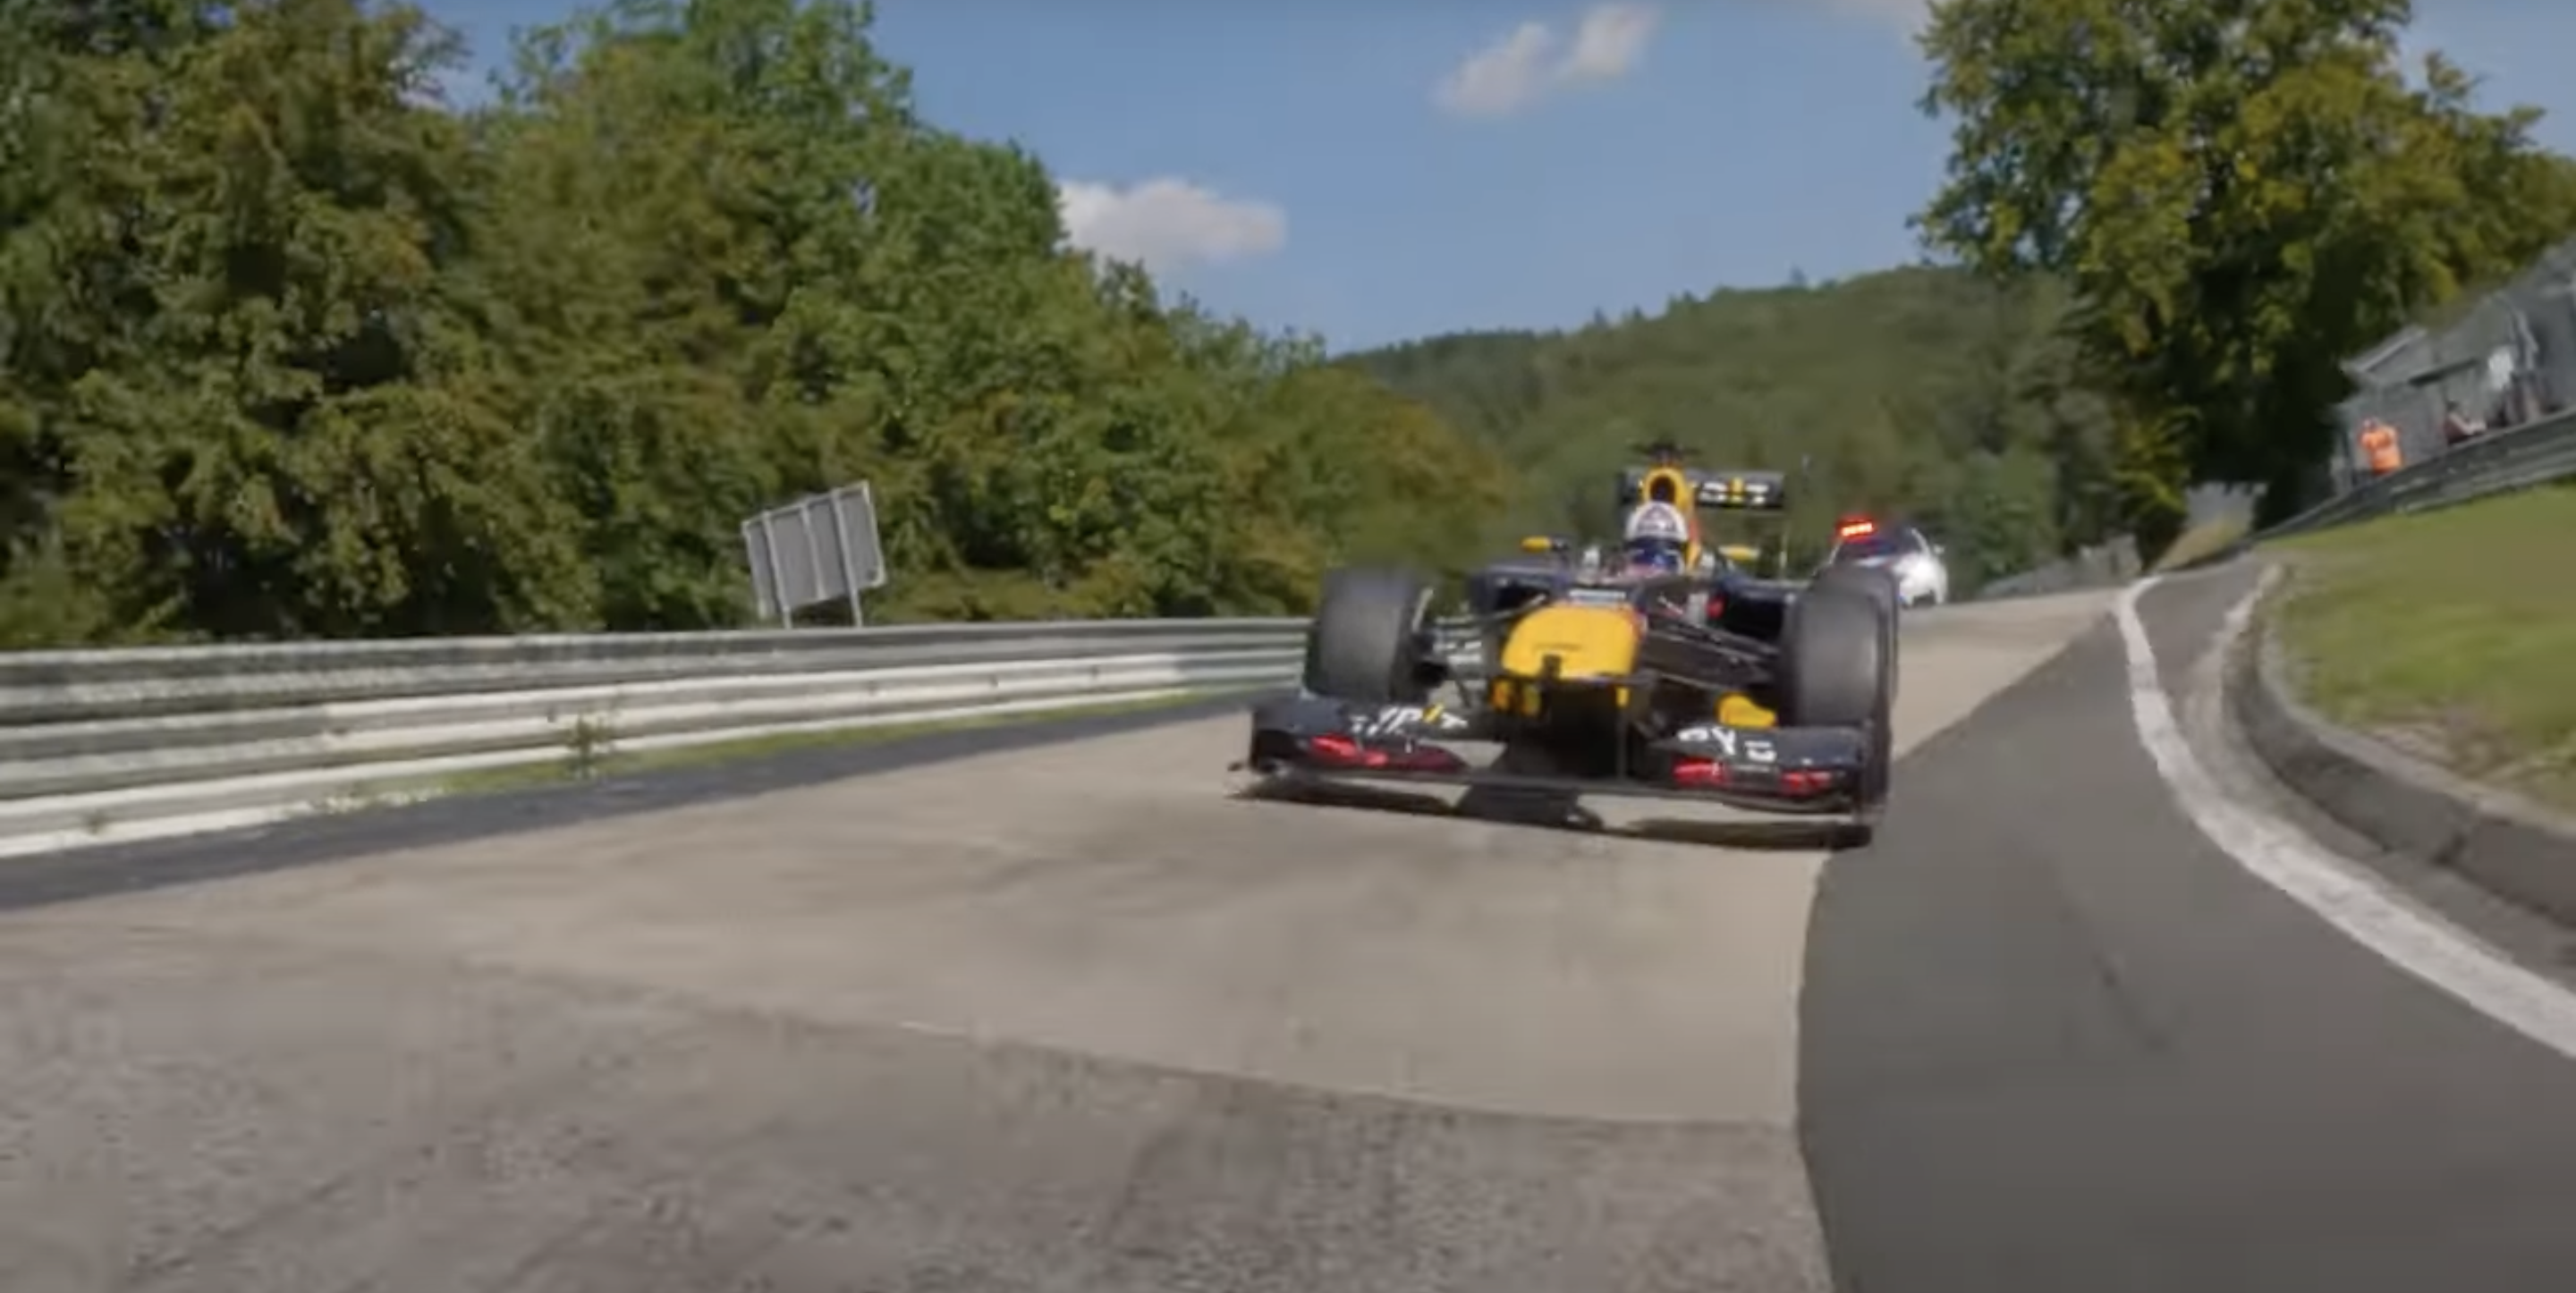 Watch Vettel Send His Red Bull F1 Around the Nürburgring